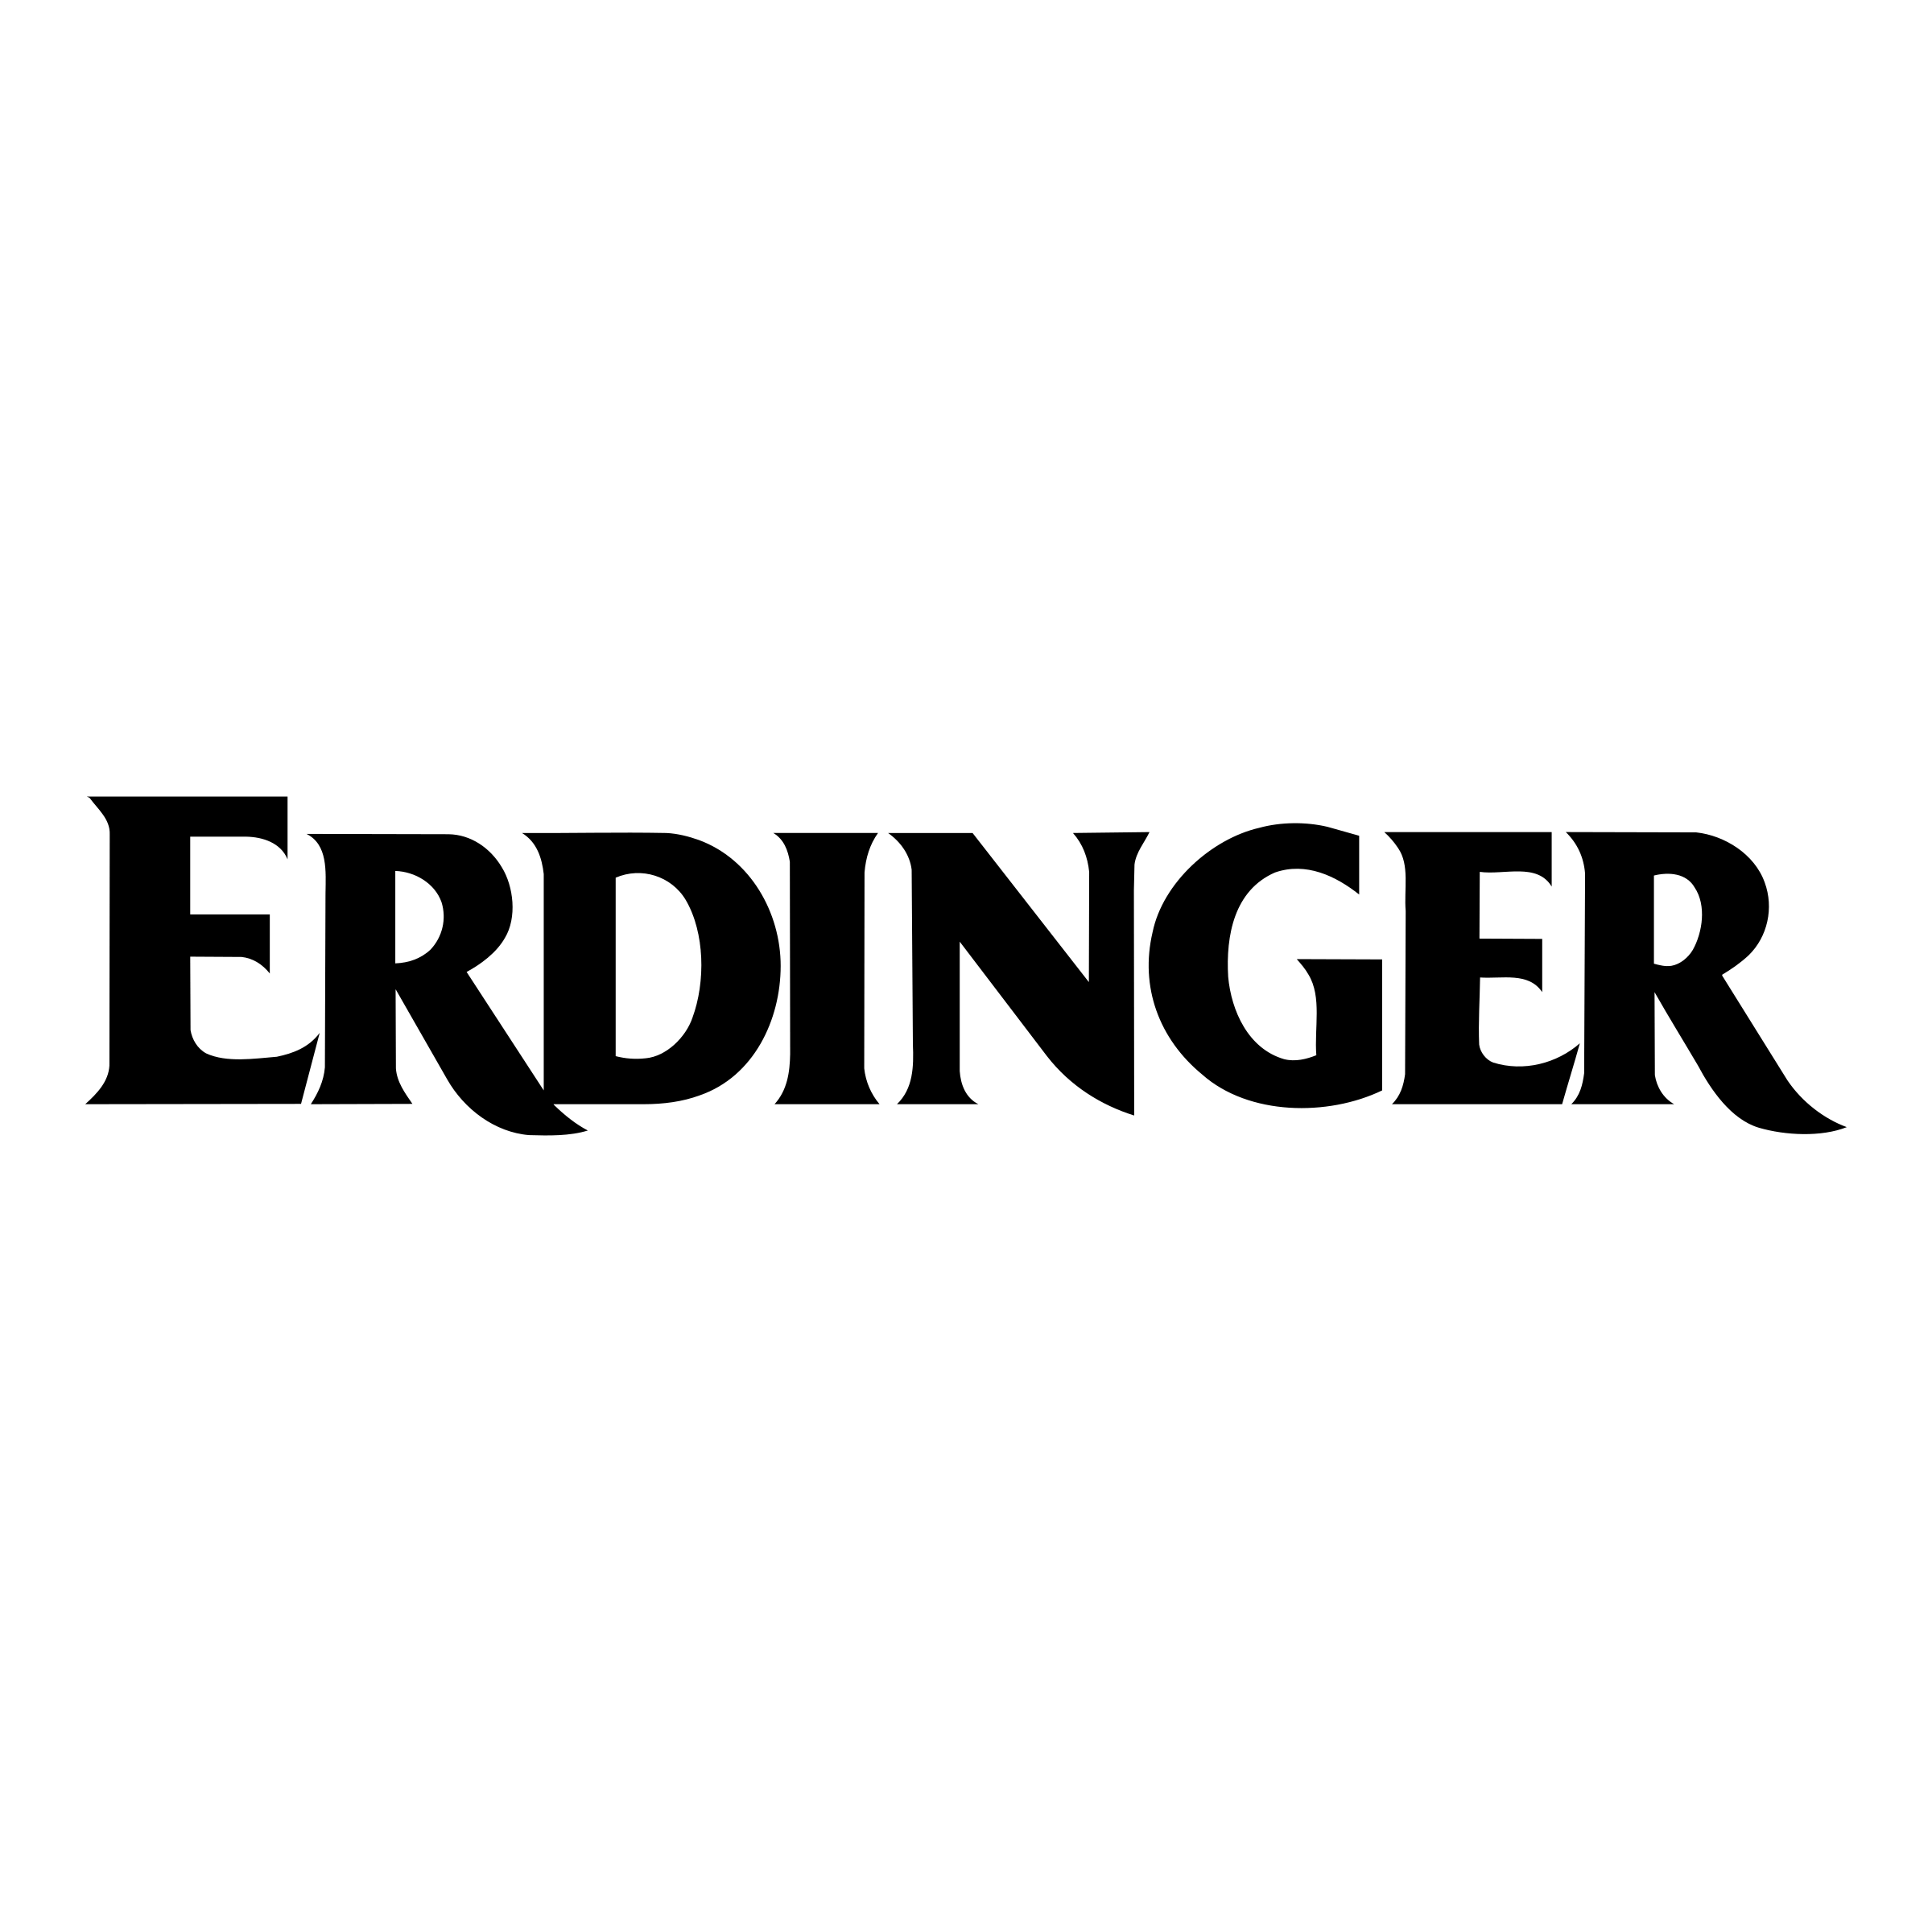 Erdinger Logo - Erdinger Logo PNG Transparent & SVG Vector - Freebie Supply